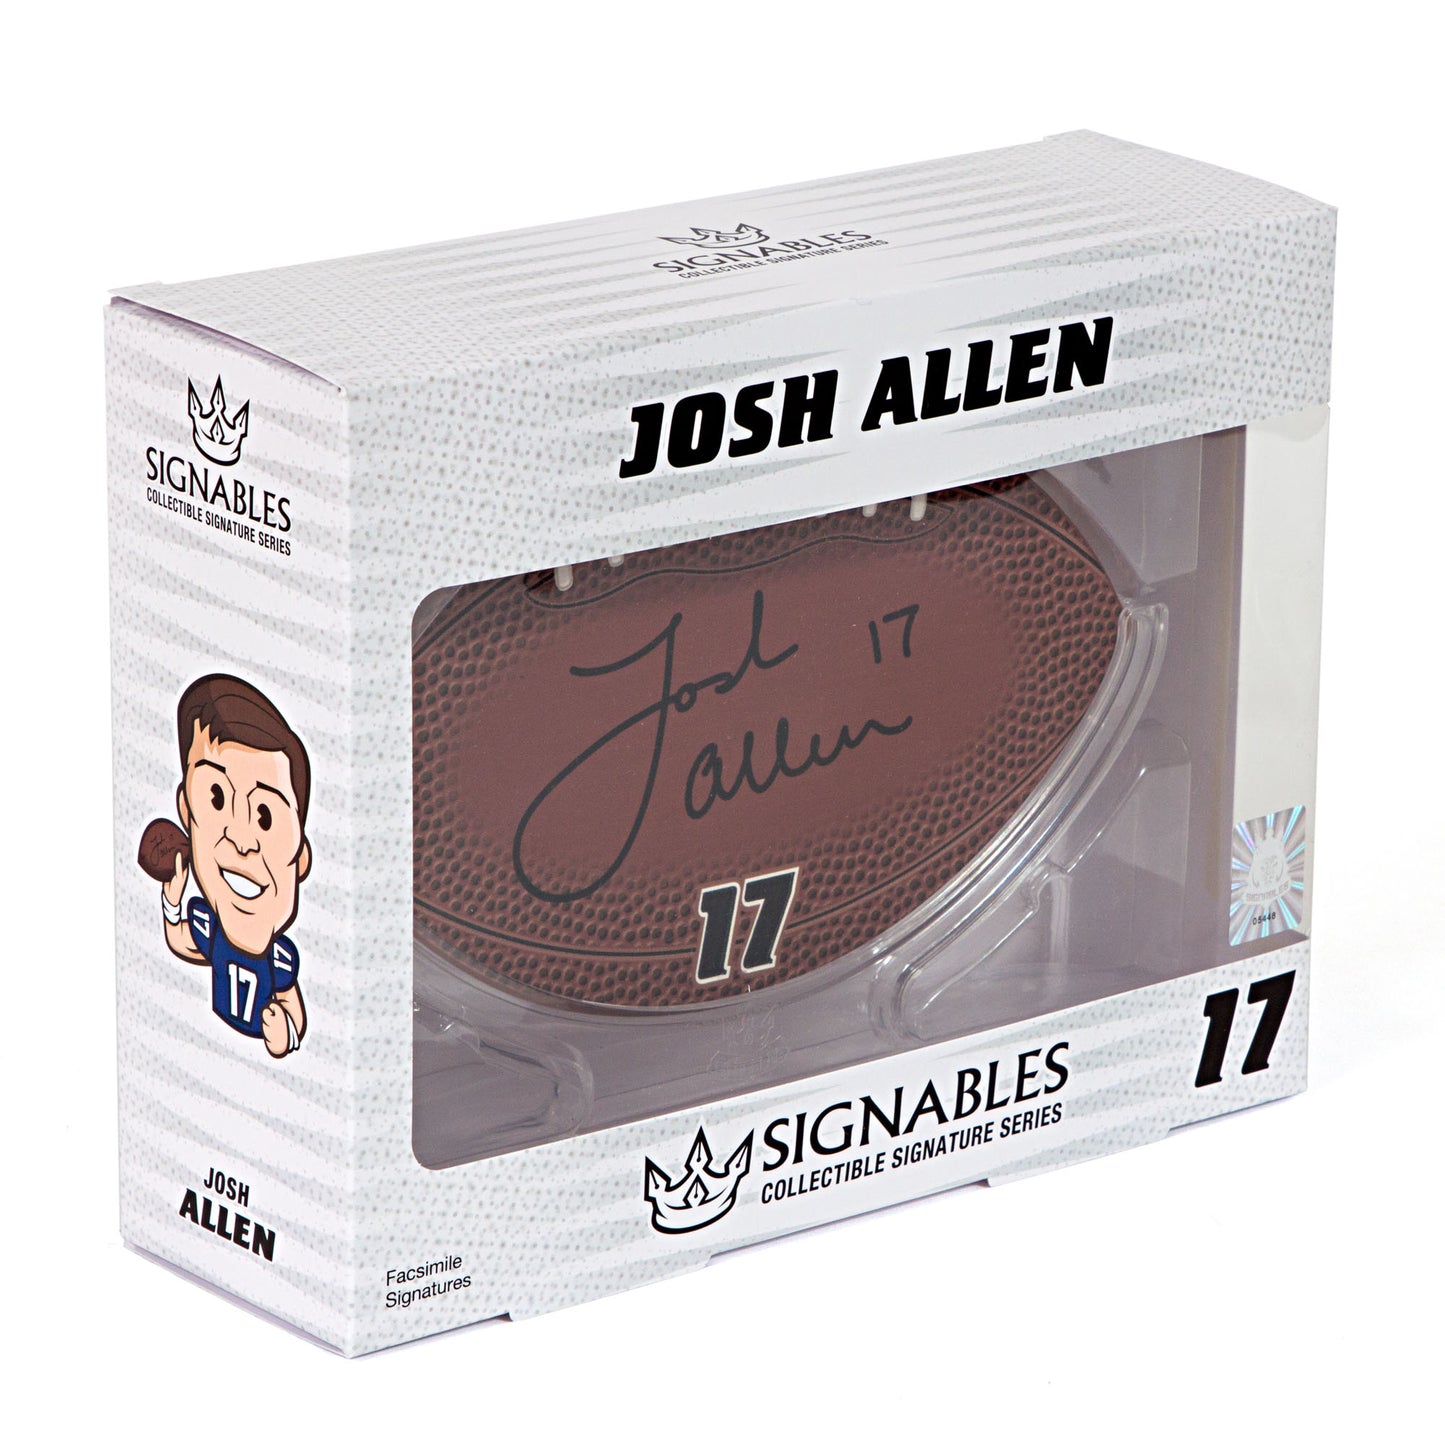 Josh Allen - NFLPA Signables Collectible